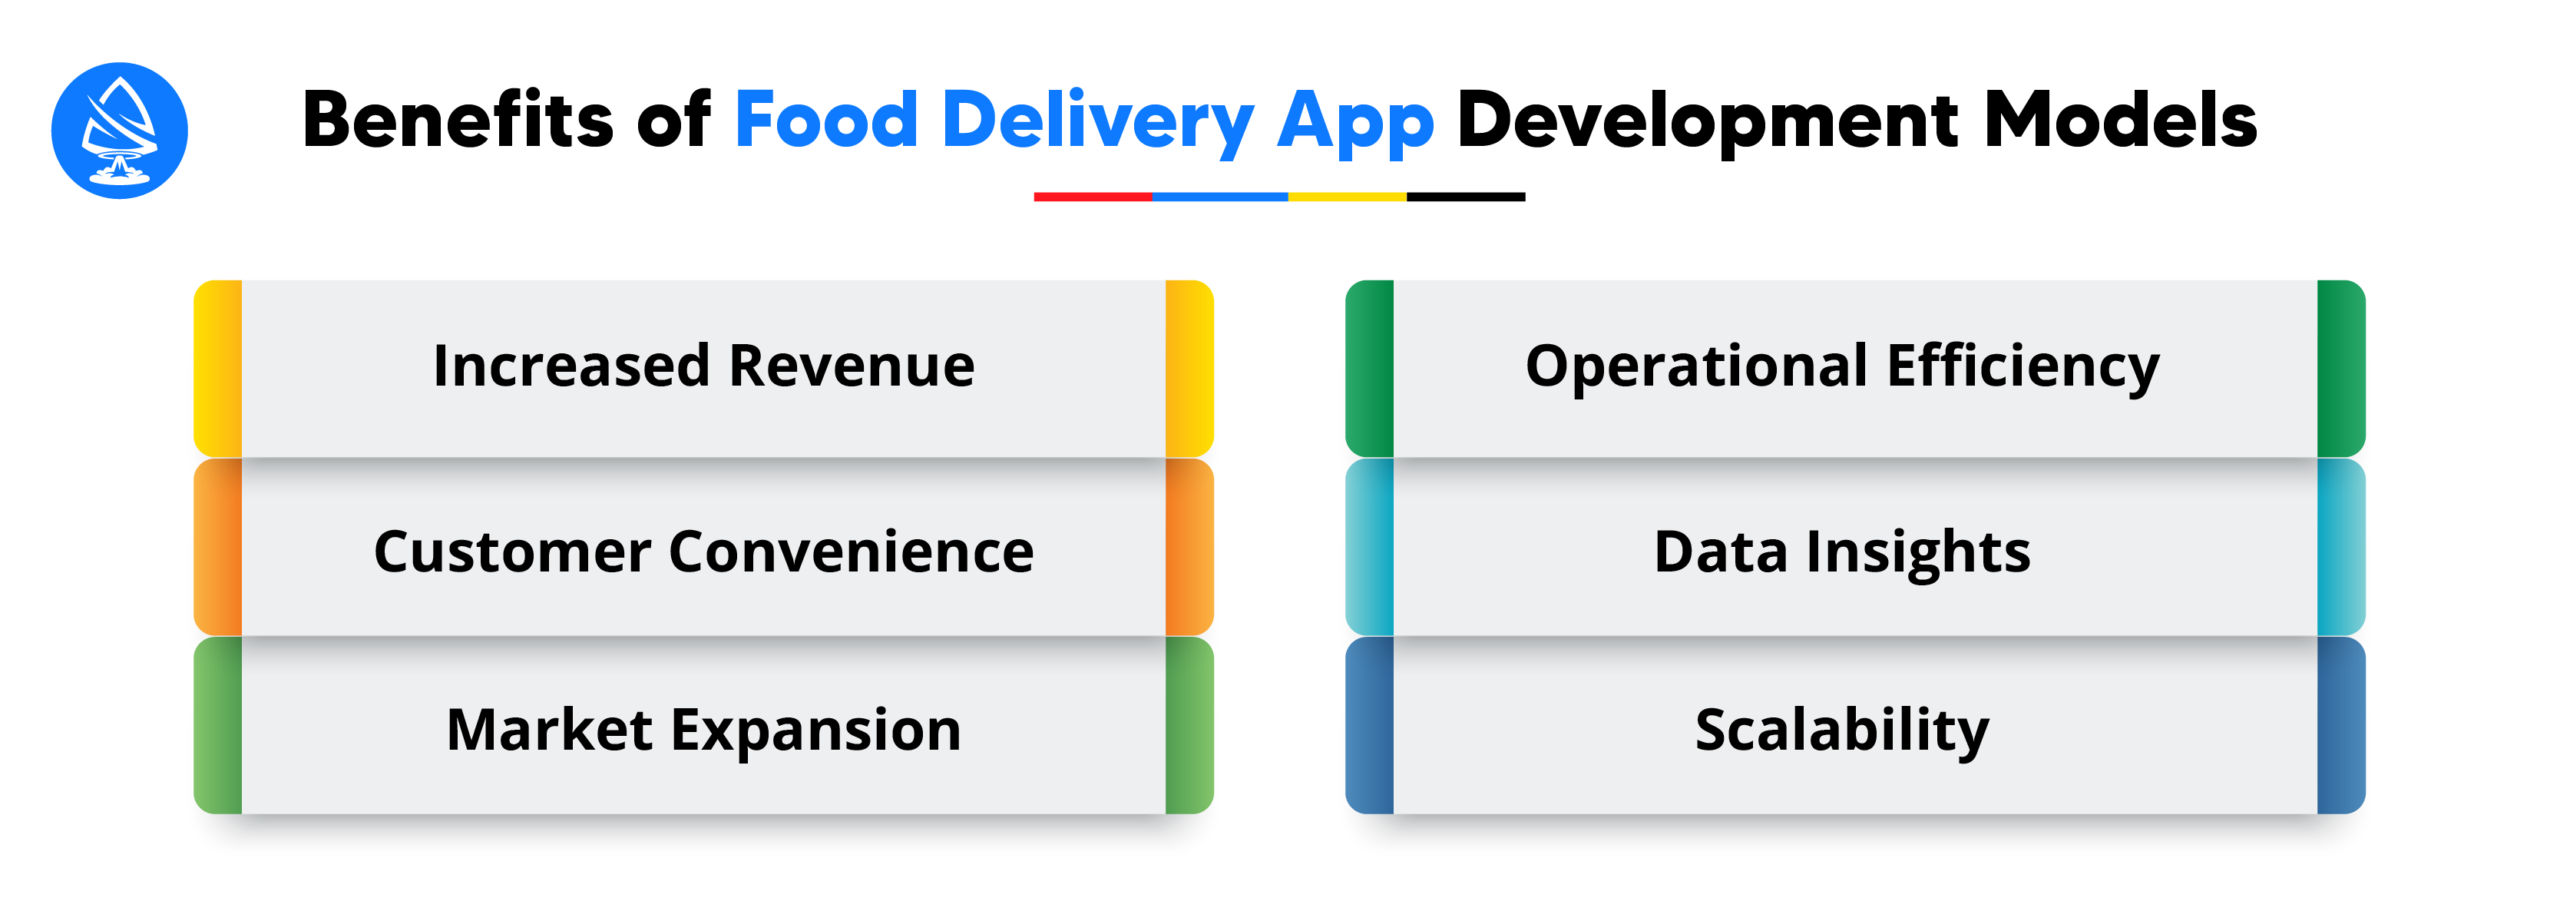 Benefits of Food Delivery App Development Models